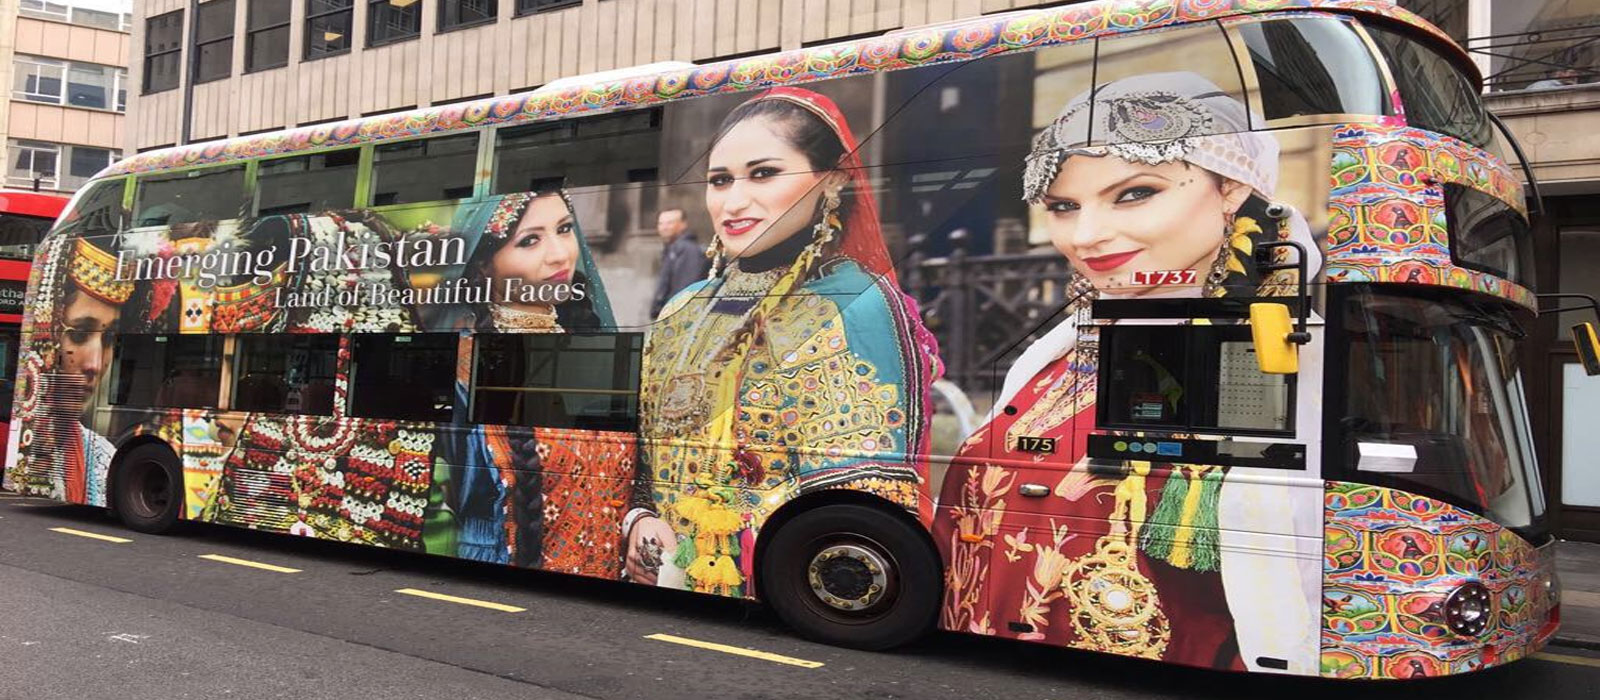 ‘Emerging Pakistan’ branding on London buses